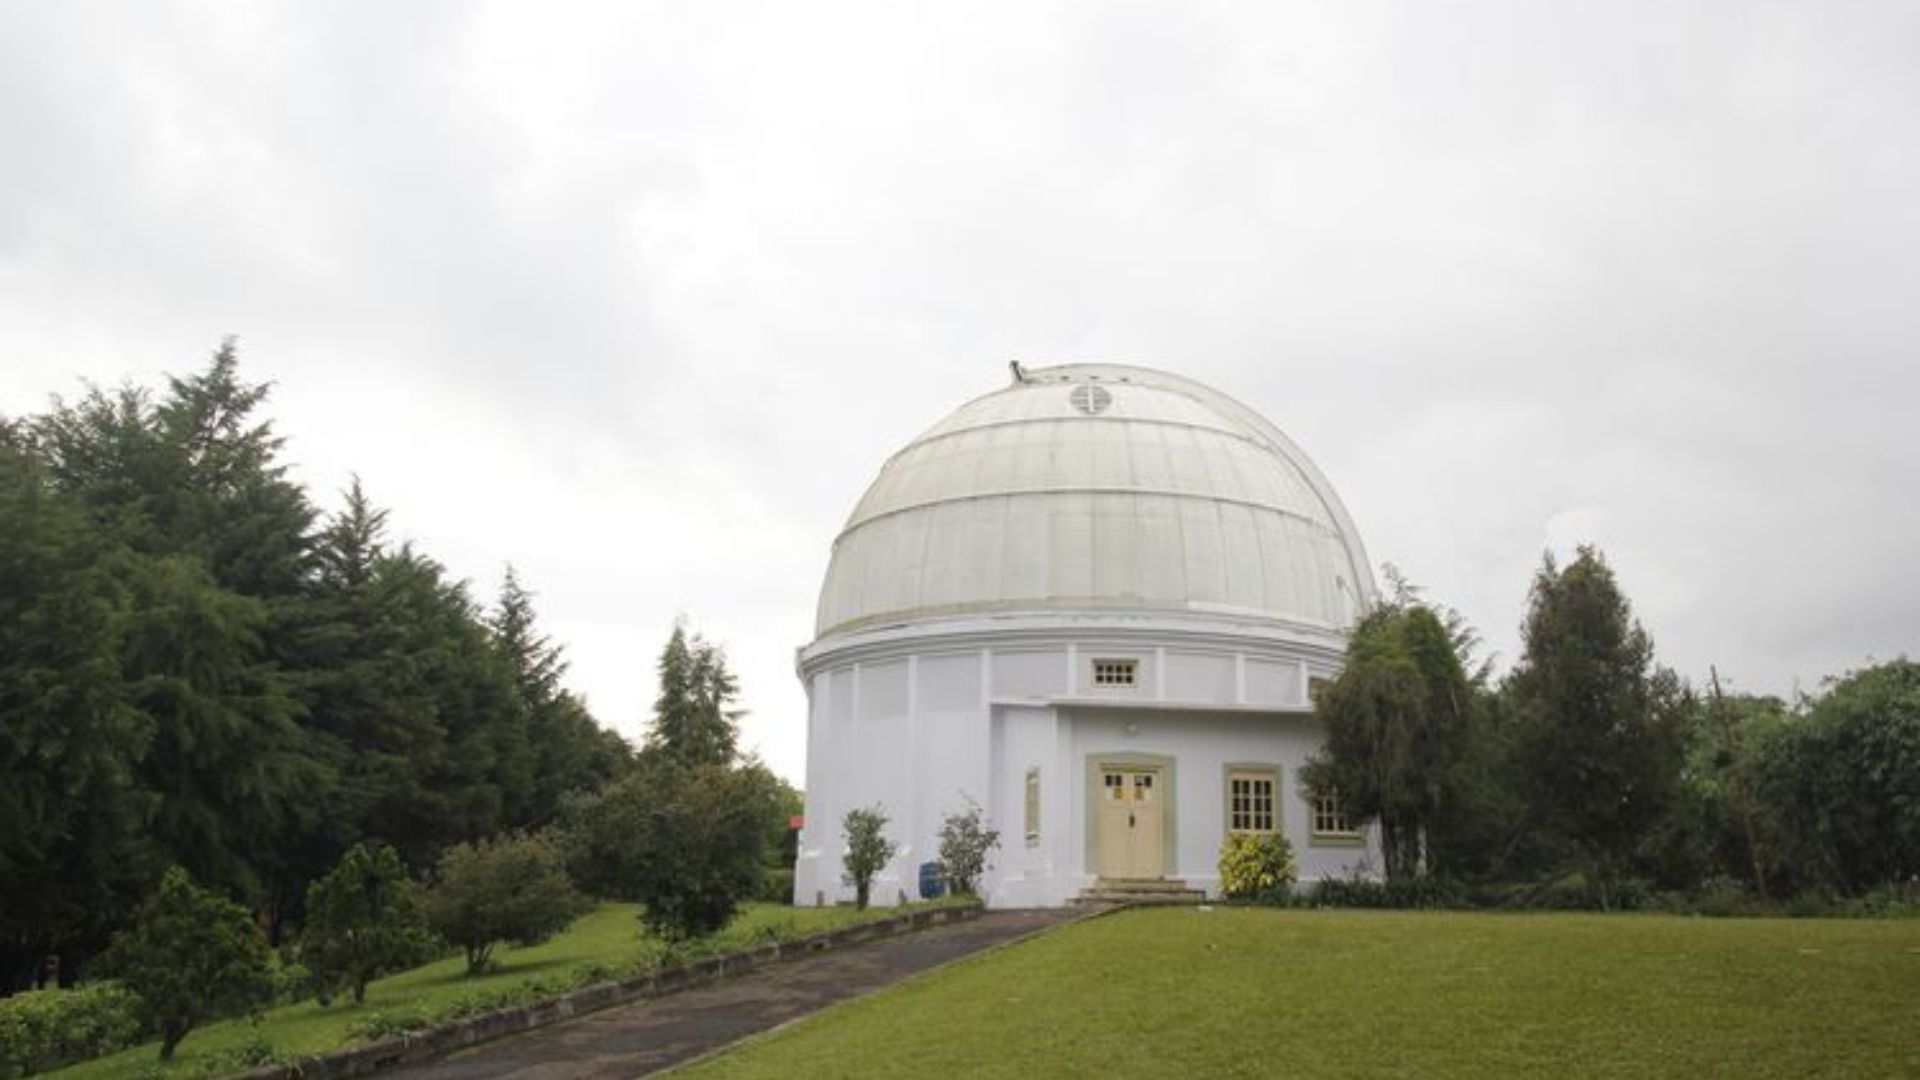 Observatorium Bosscha: Jl. Lembang No.104, Lembang, Bandung Barat, Jawa Barat